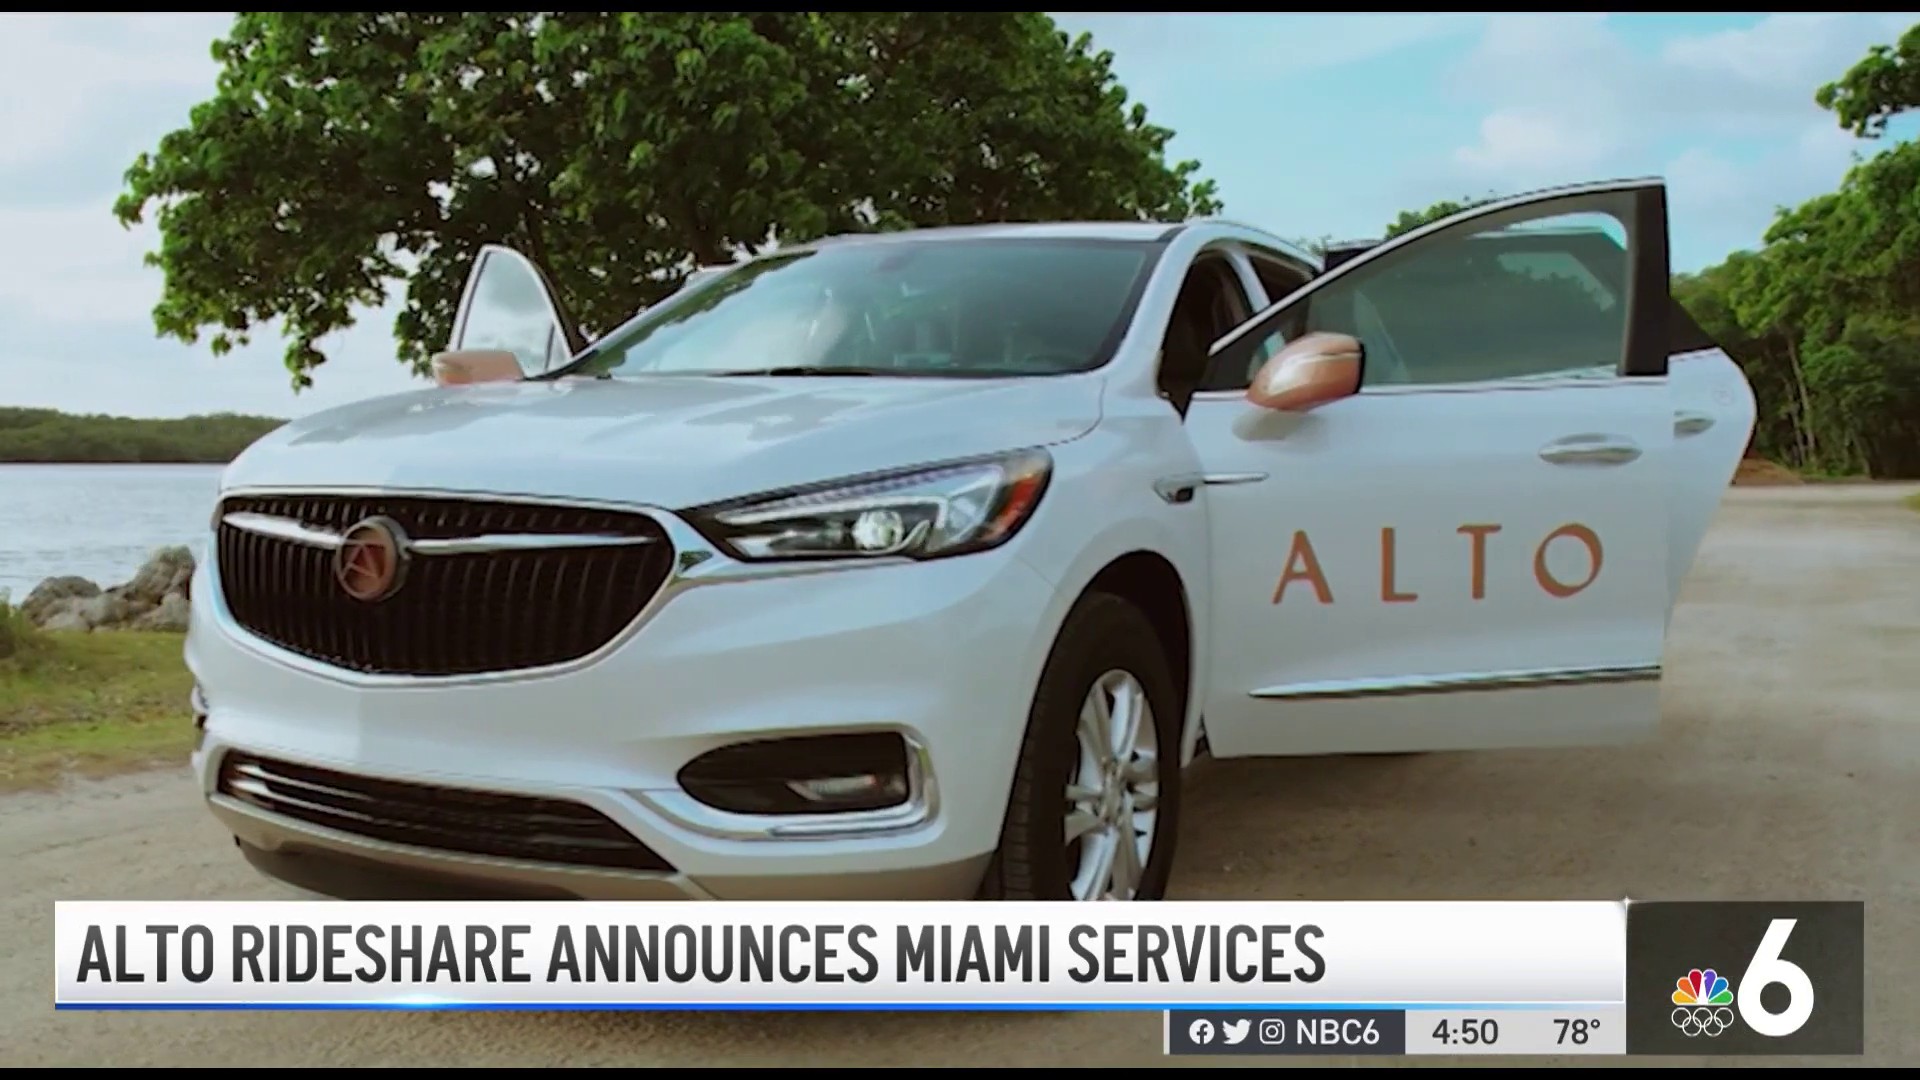 Employee-Based Rideshare Company Alto Announces Miami Services – NBC 6  South Florida